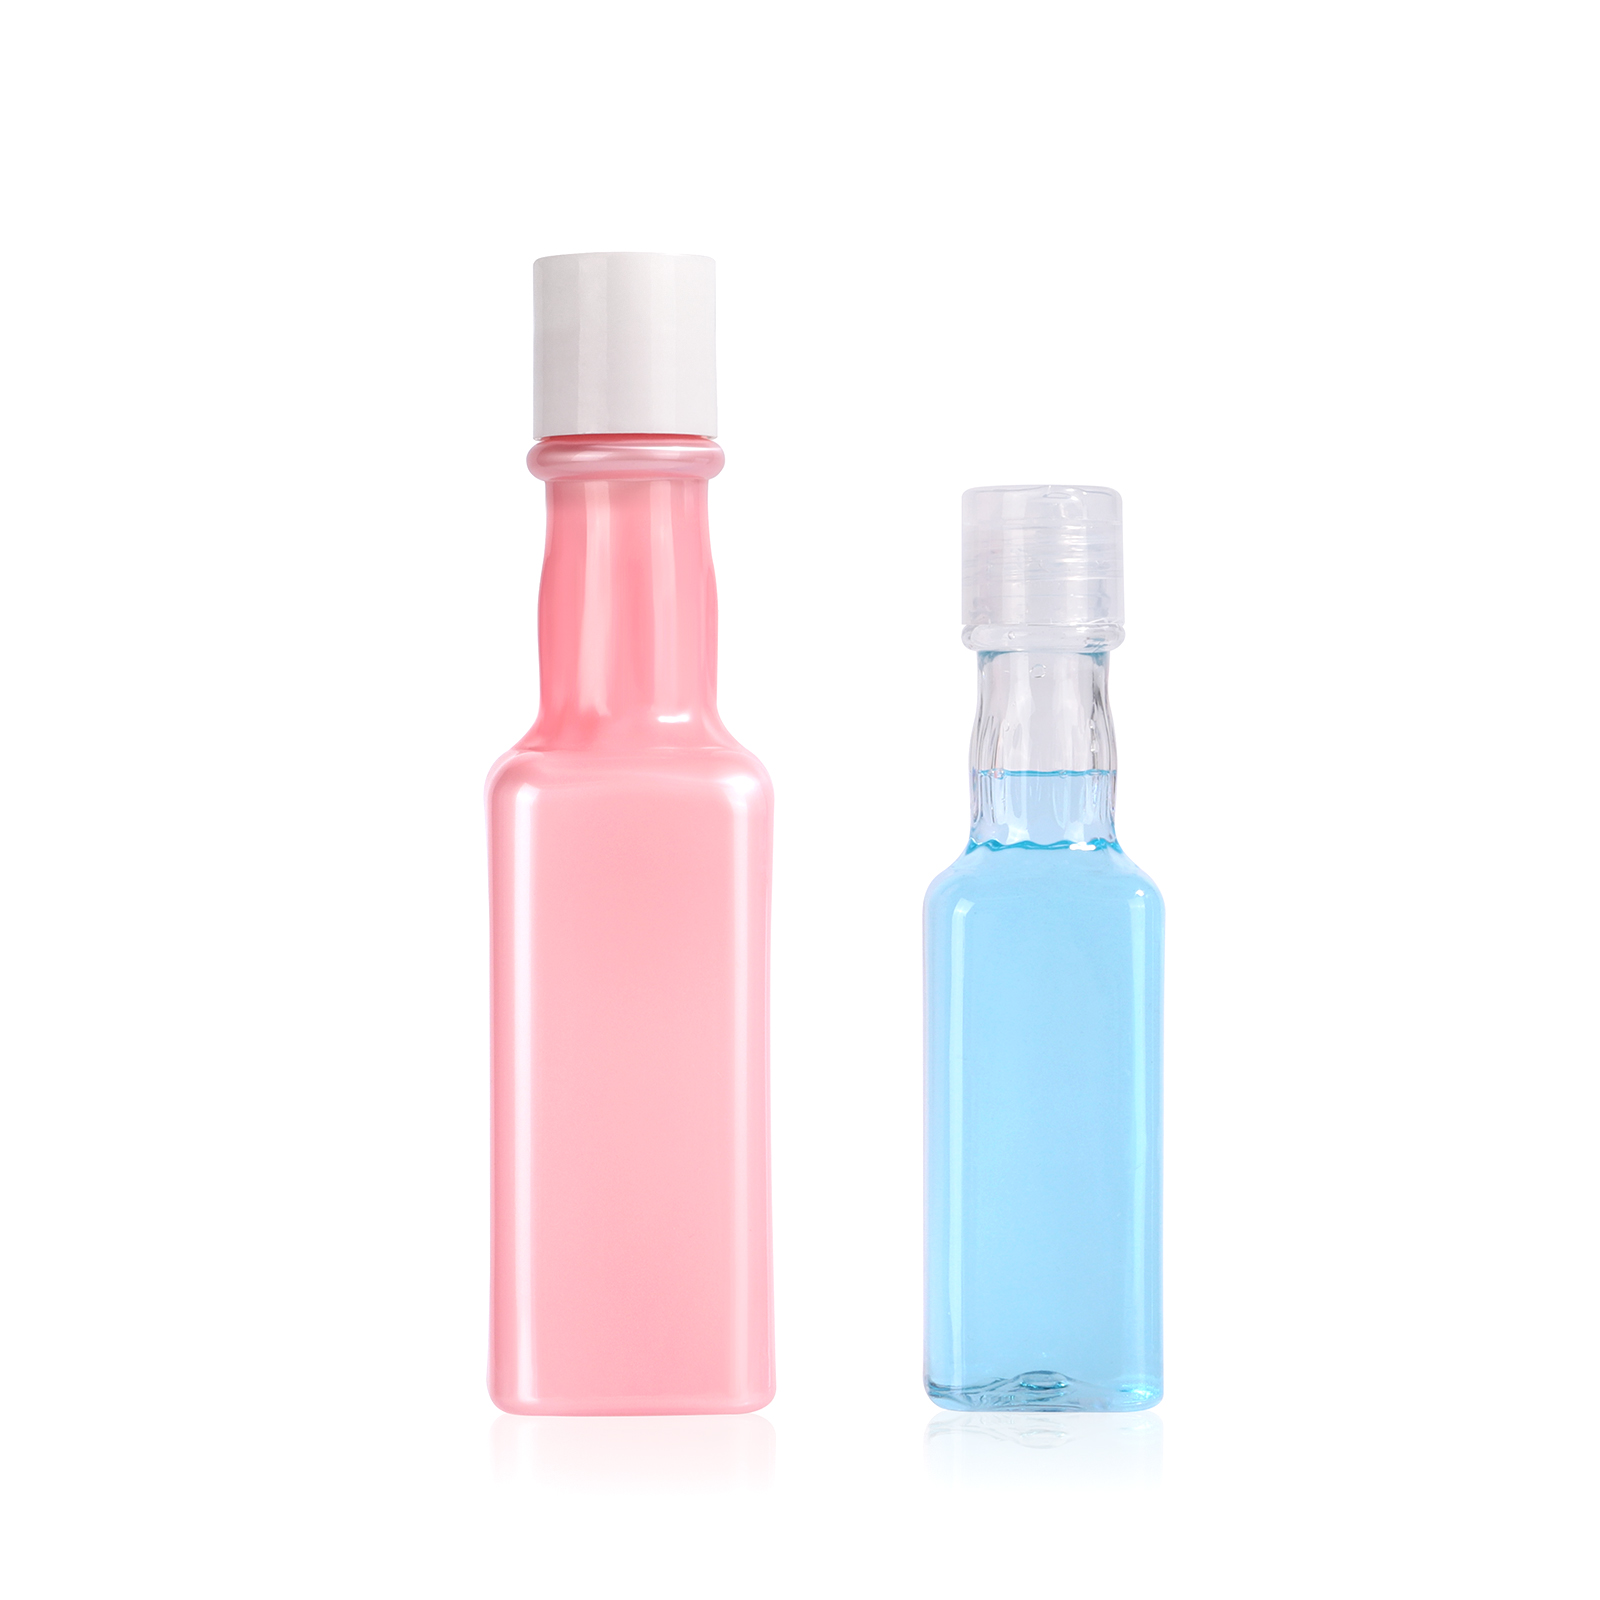 135ml/250ml empty custom made PET plastic bottle drink/perfume bottle